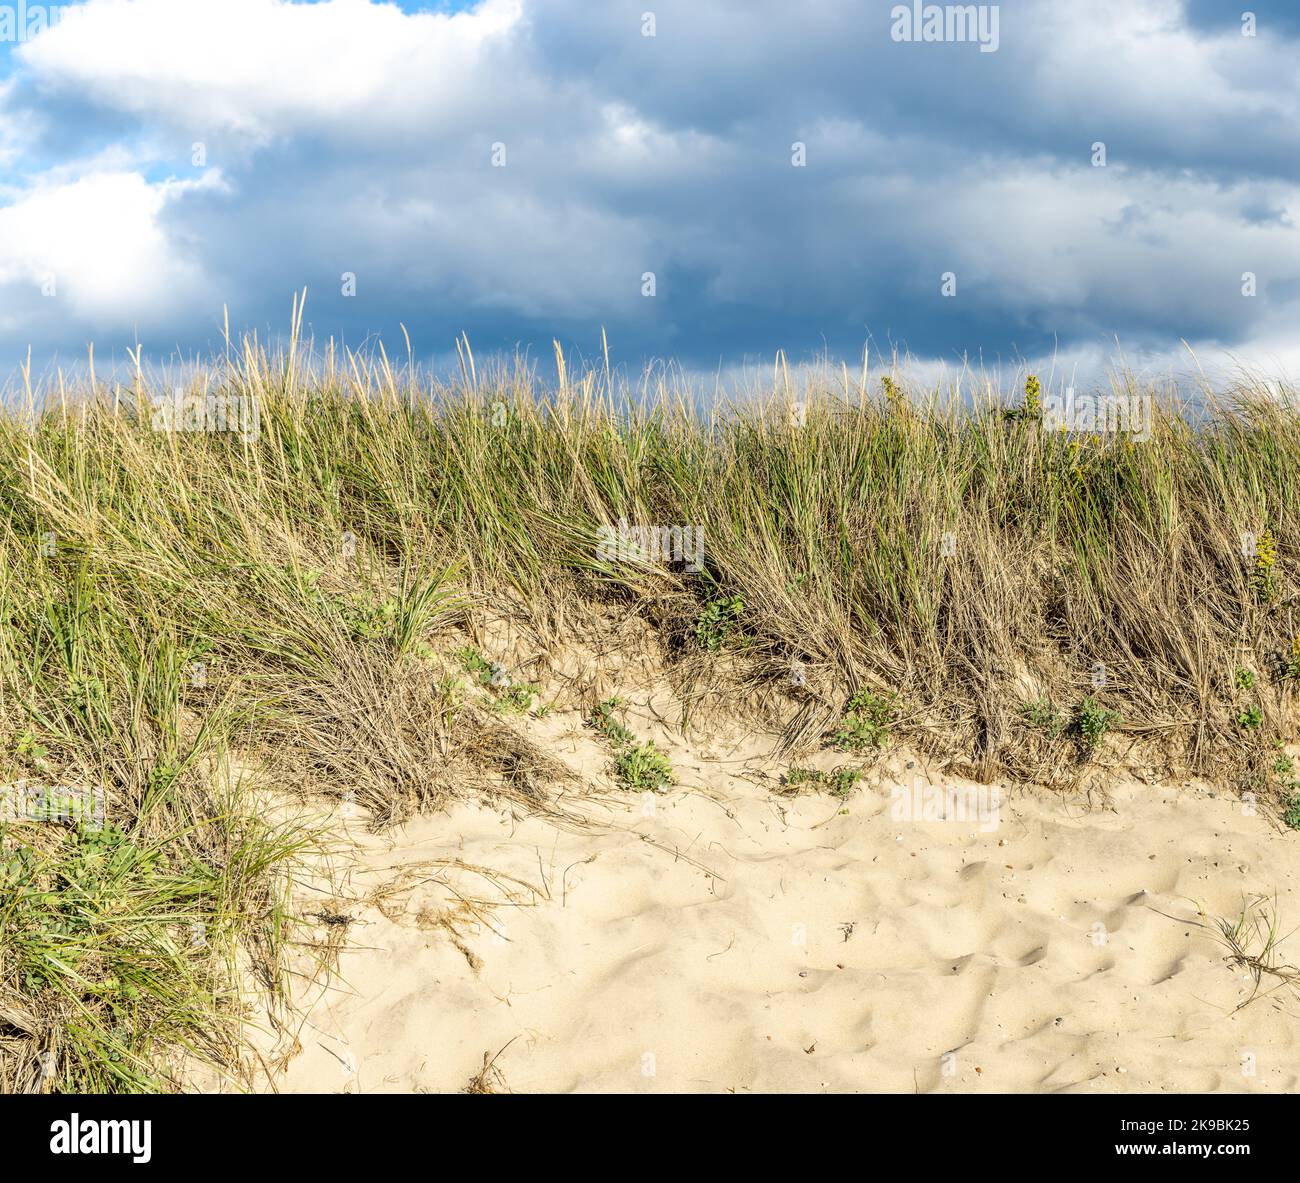 Detail image of a sandy beach meeting beach grass Stock Photo